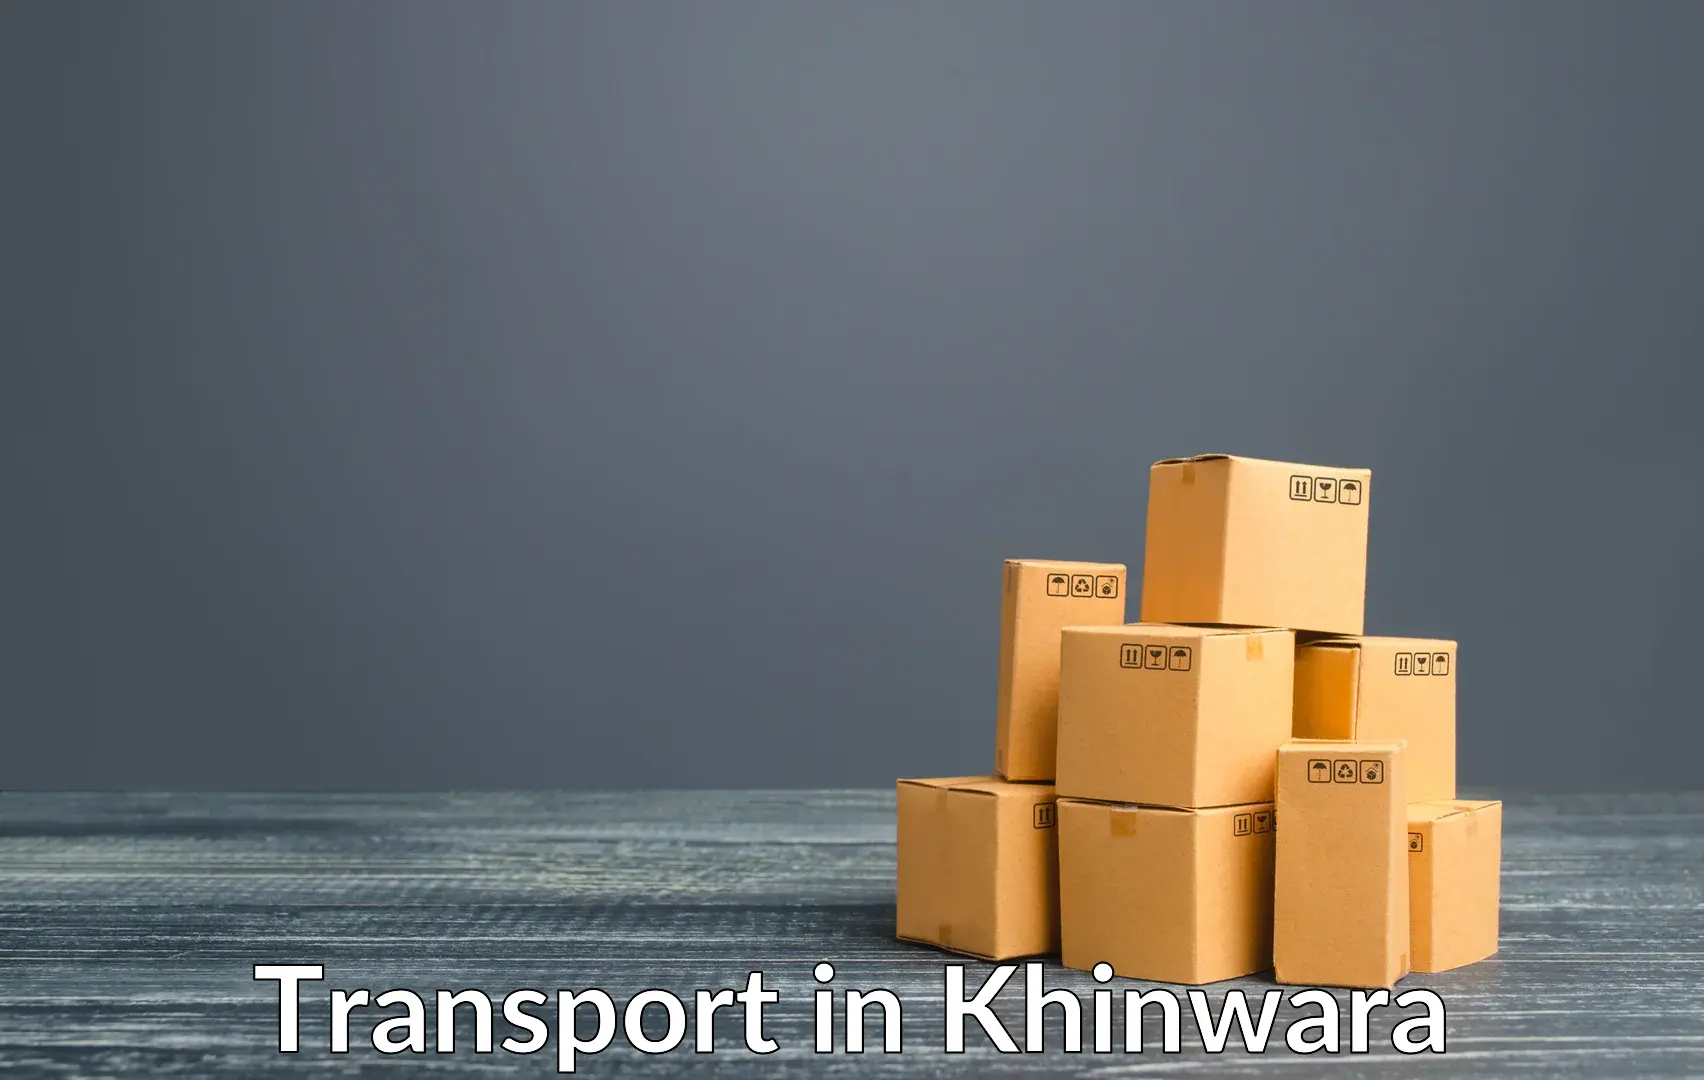 Transport in sharing in Khinwara